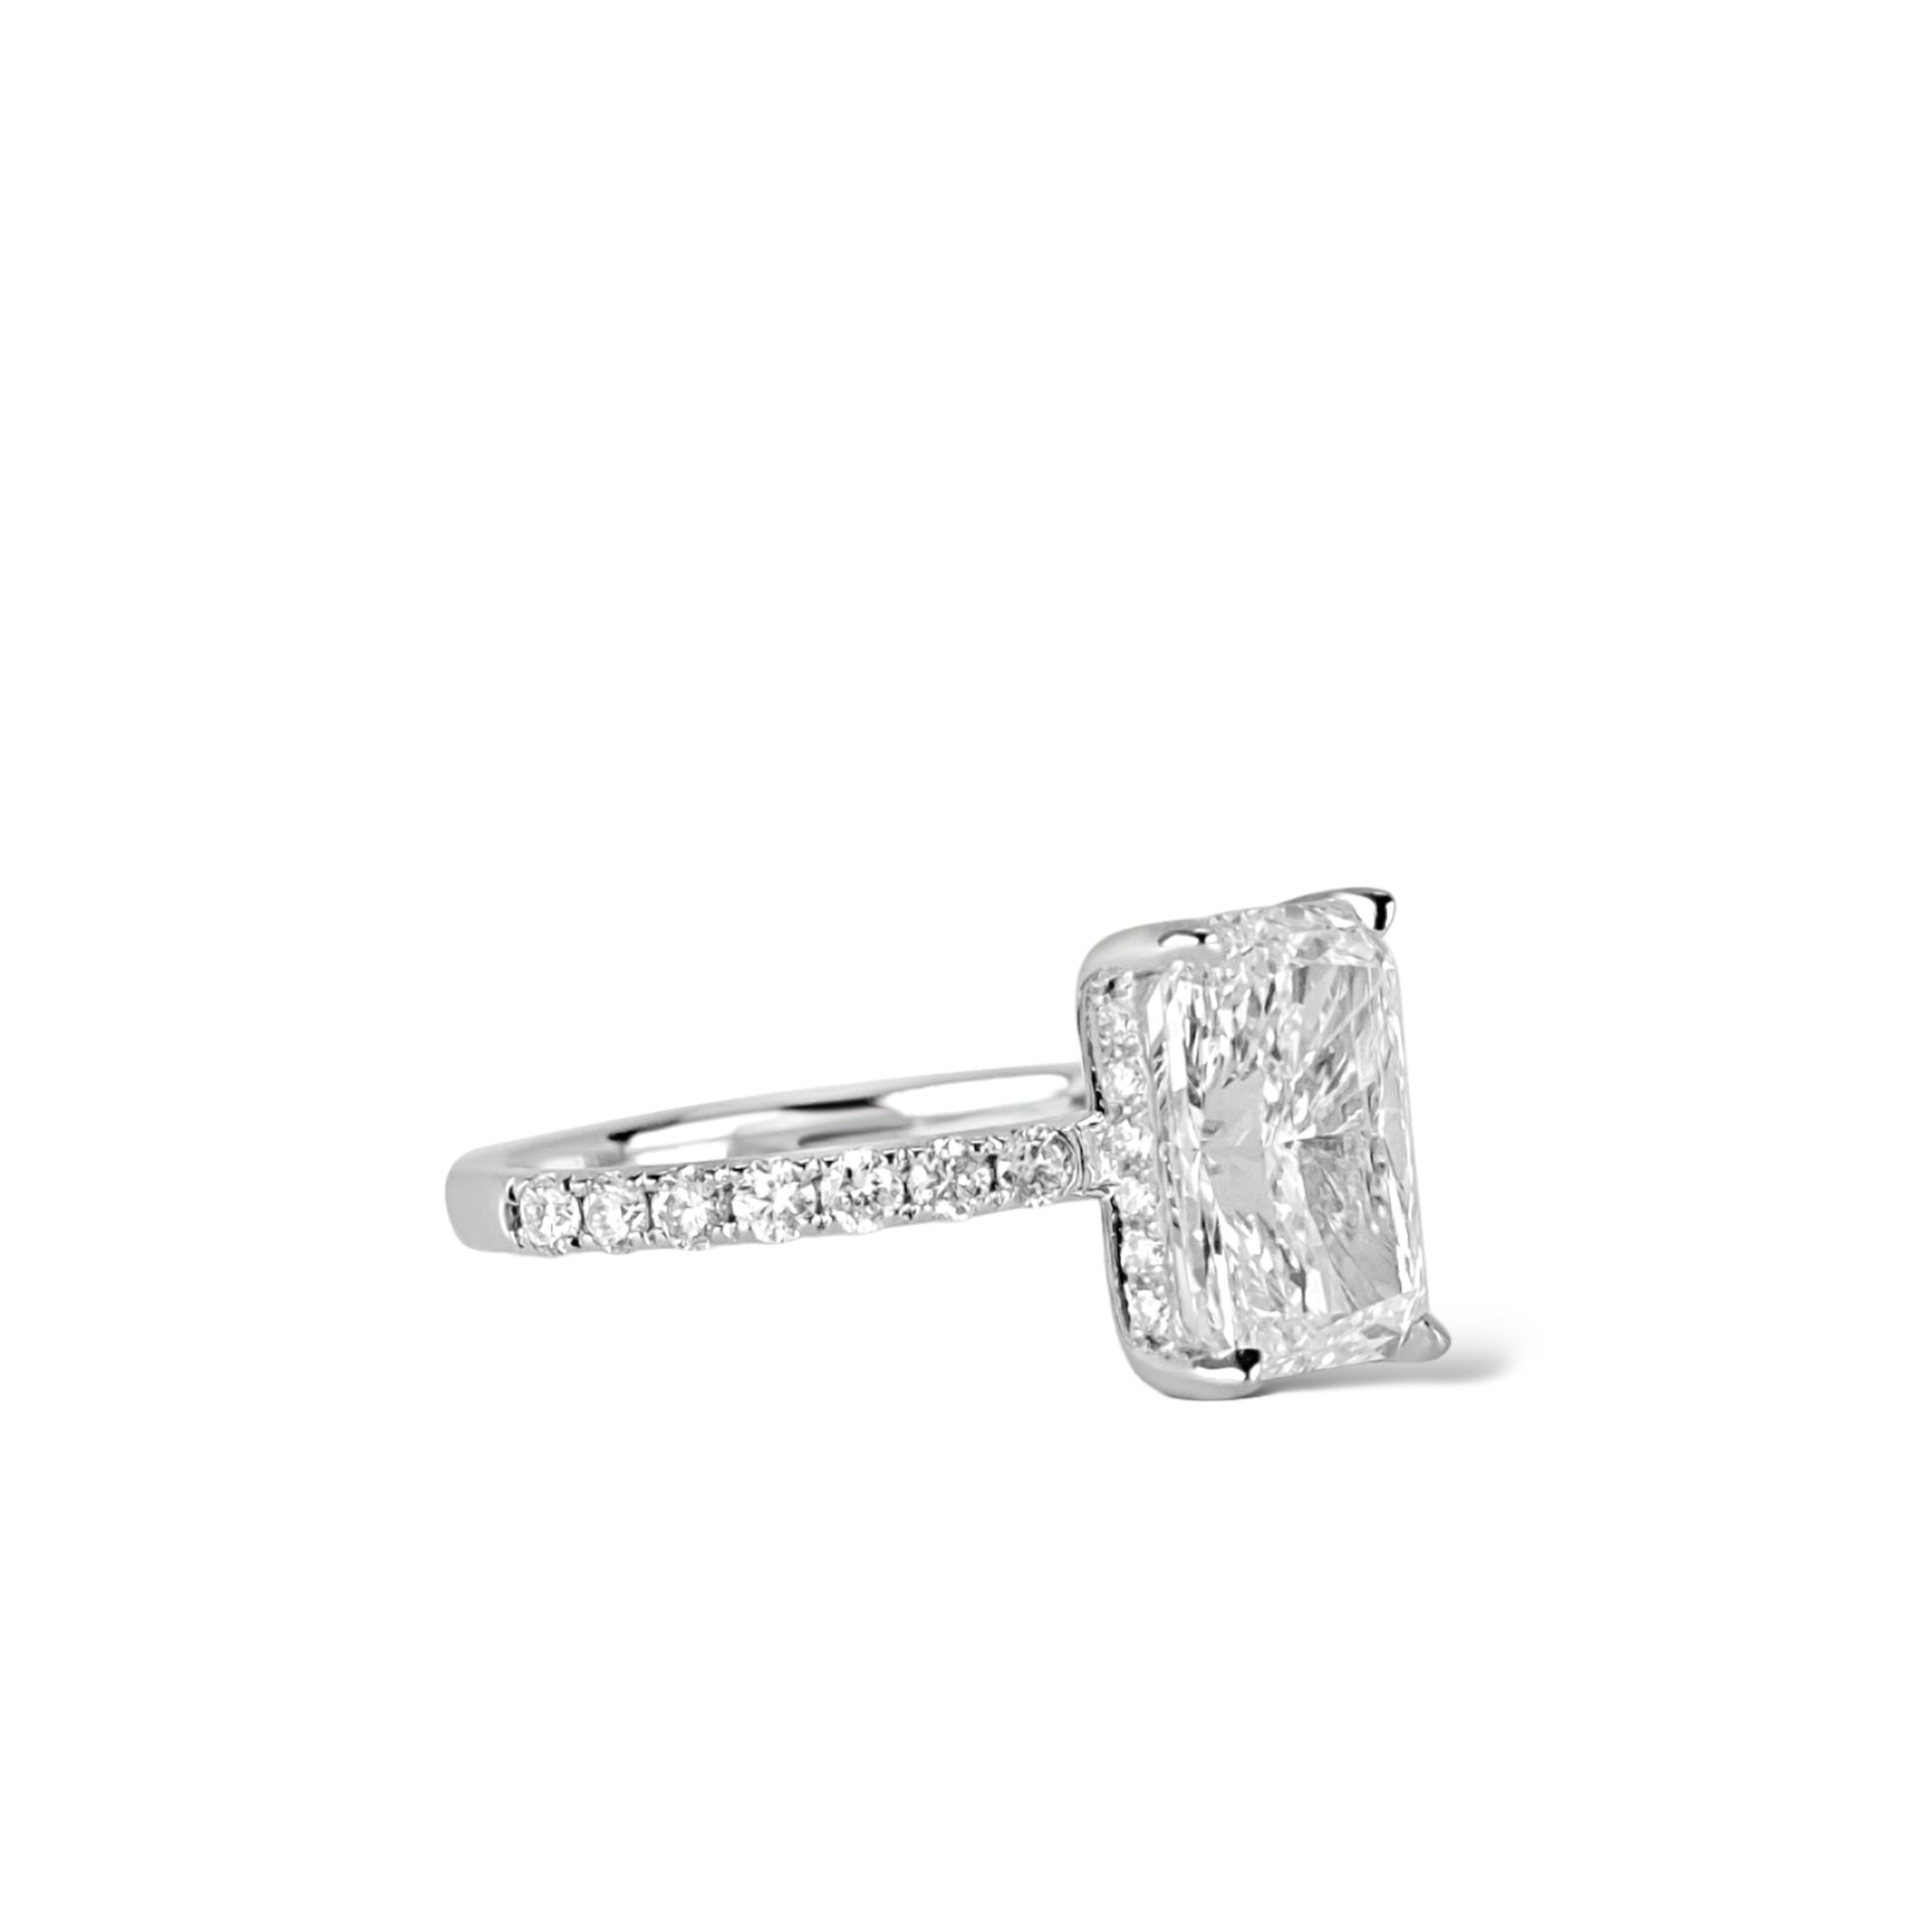 3.00ct Radiant Cut Diamond Engagement Ring in Platinum. 3 carat engagement ring Hong Kong USA Australia New Zealand. 3 carat lab grown radiant cut diamond ring